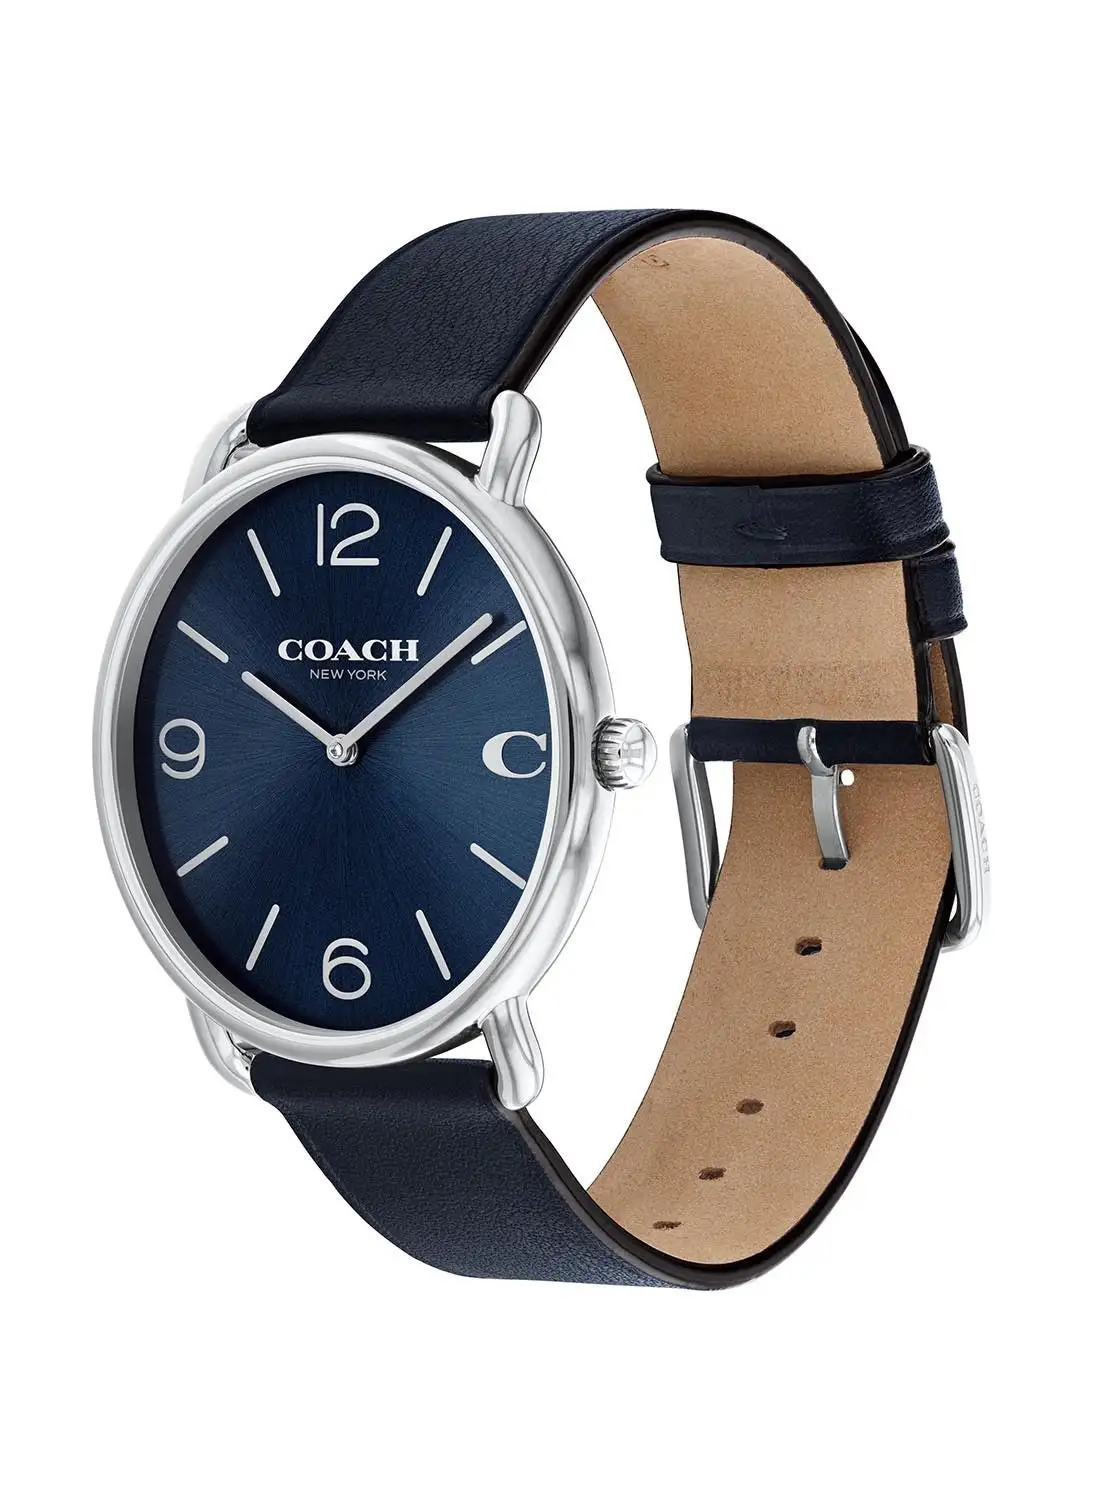 COACH Men's Analog Round Shape Leather Wrist Watch 14602649 - 41 Mm